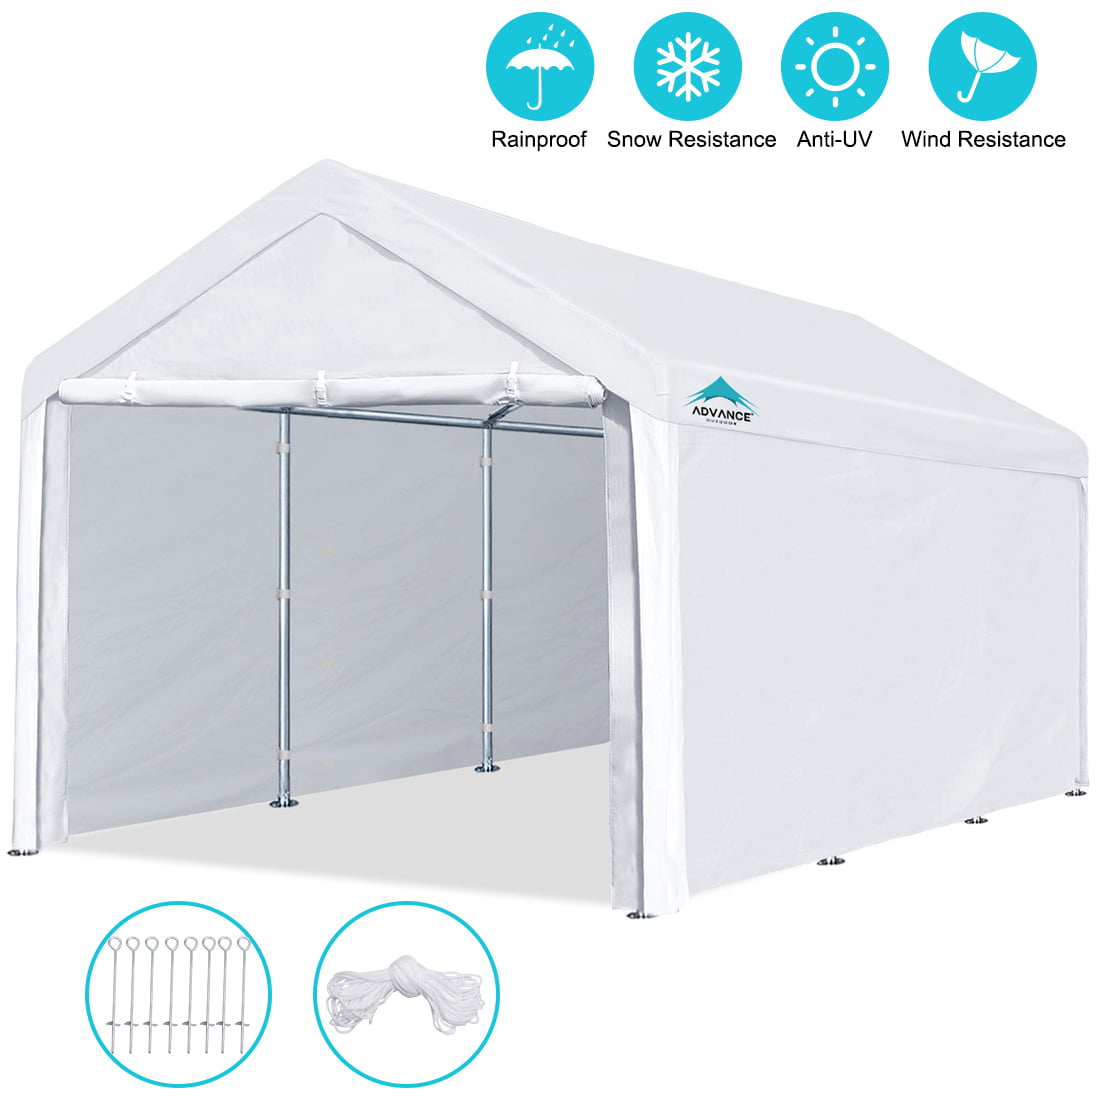 10 x 20Ft Steel Carport Car Port Canopy Tent Sun Shelter Canopy Heavy Duty White